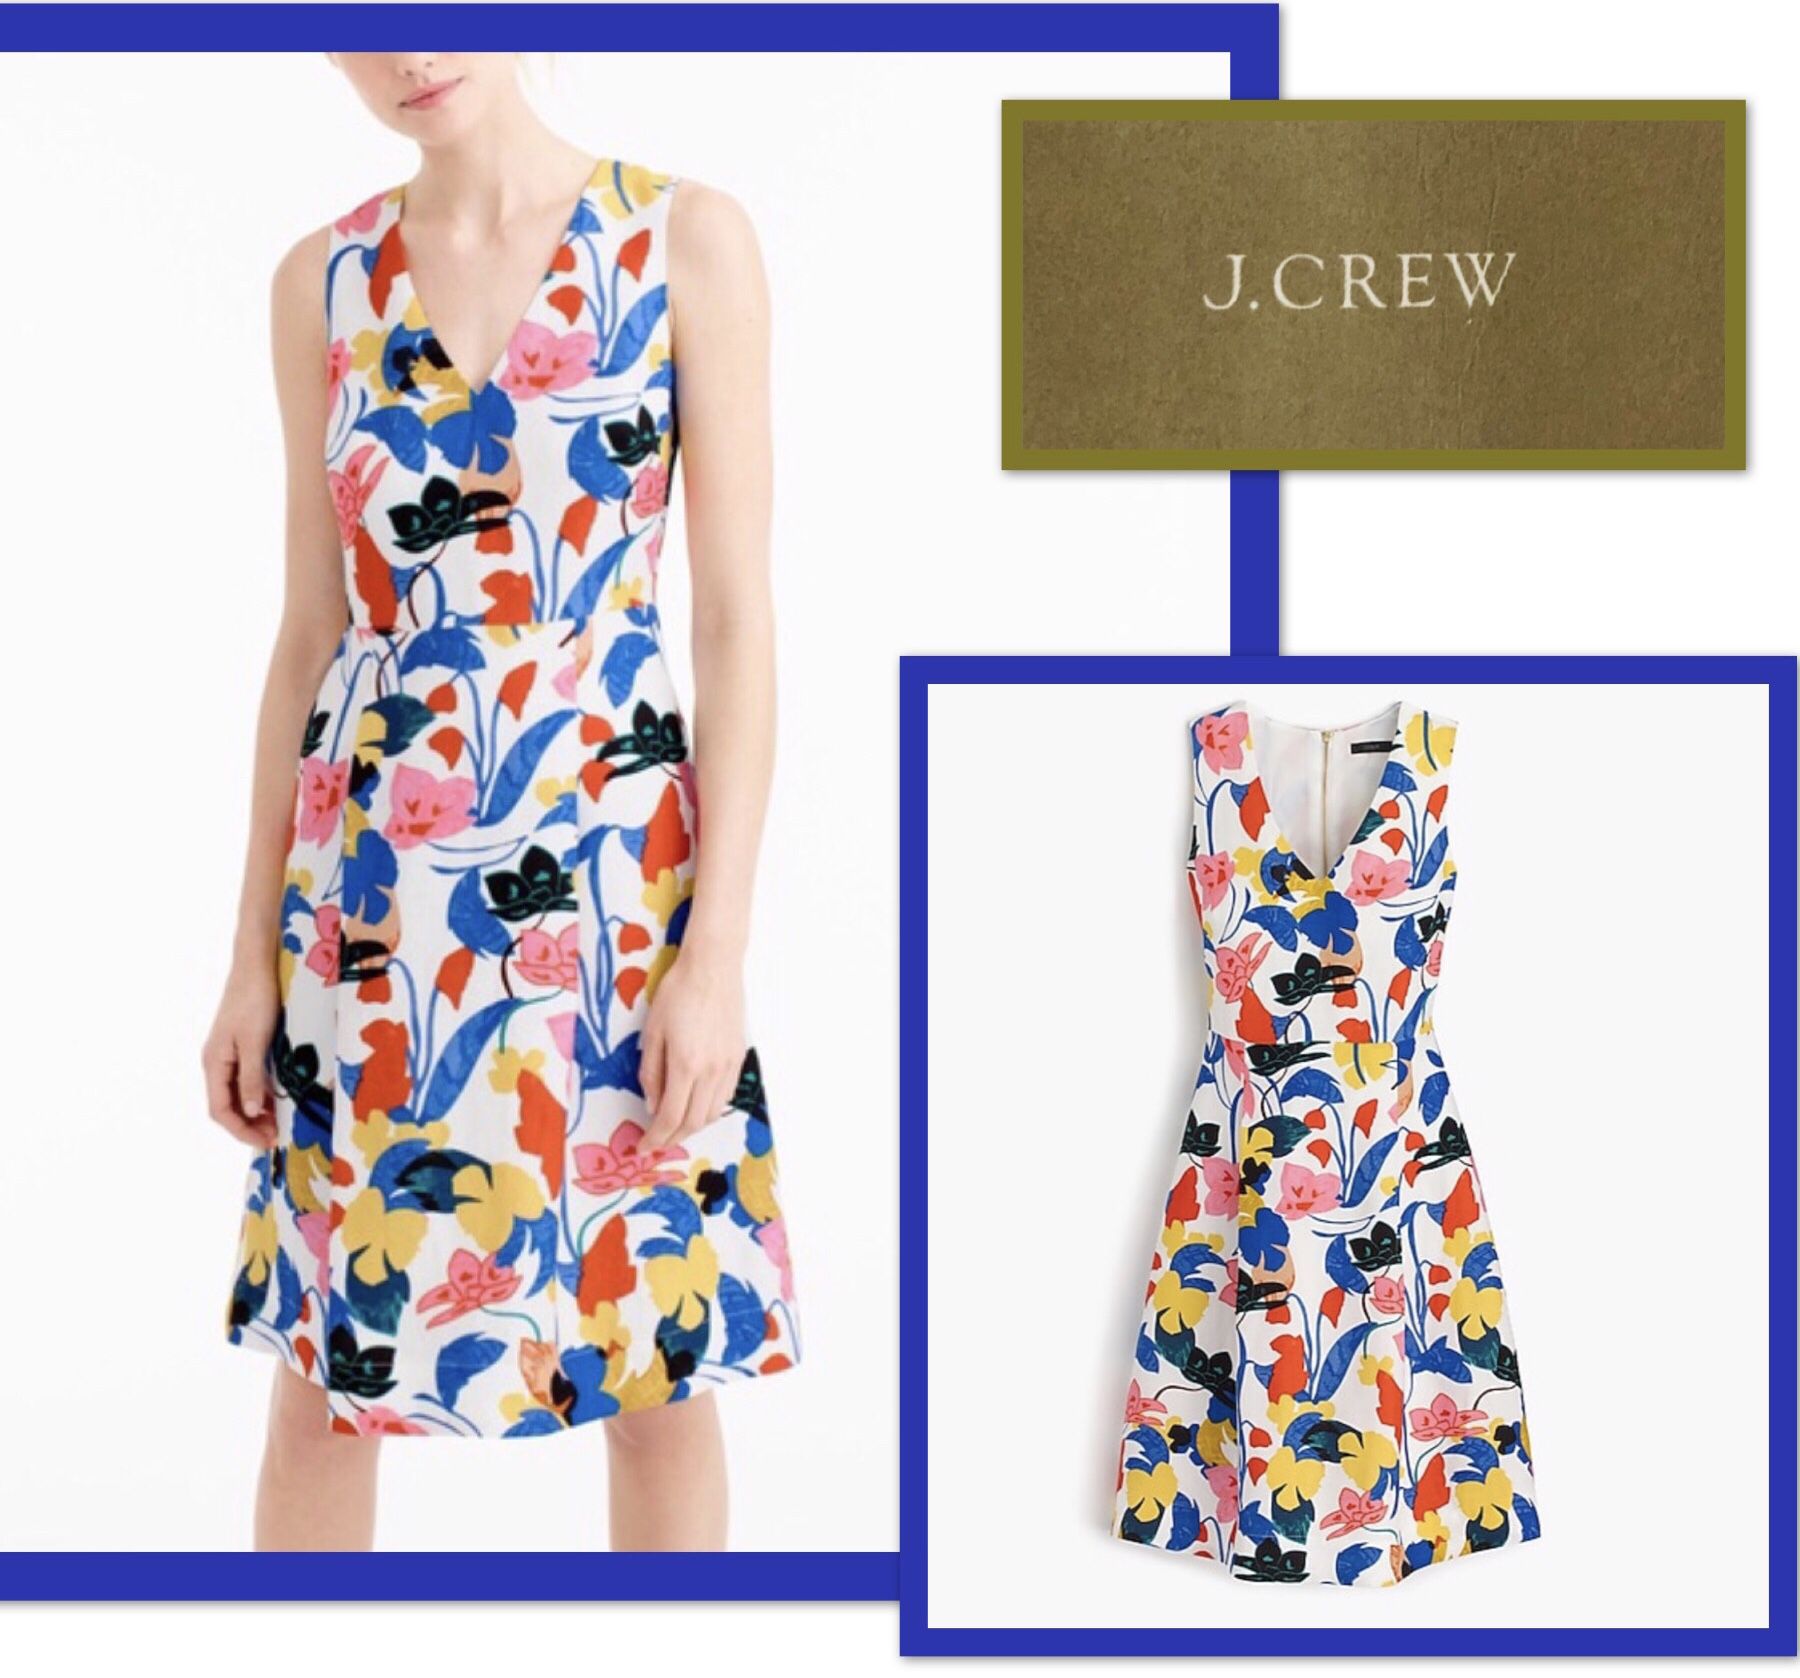 J.Crew Floral Dress size 0